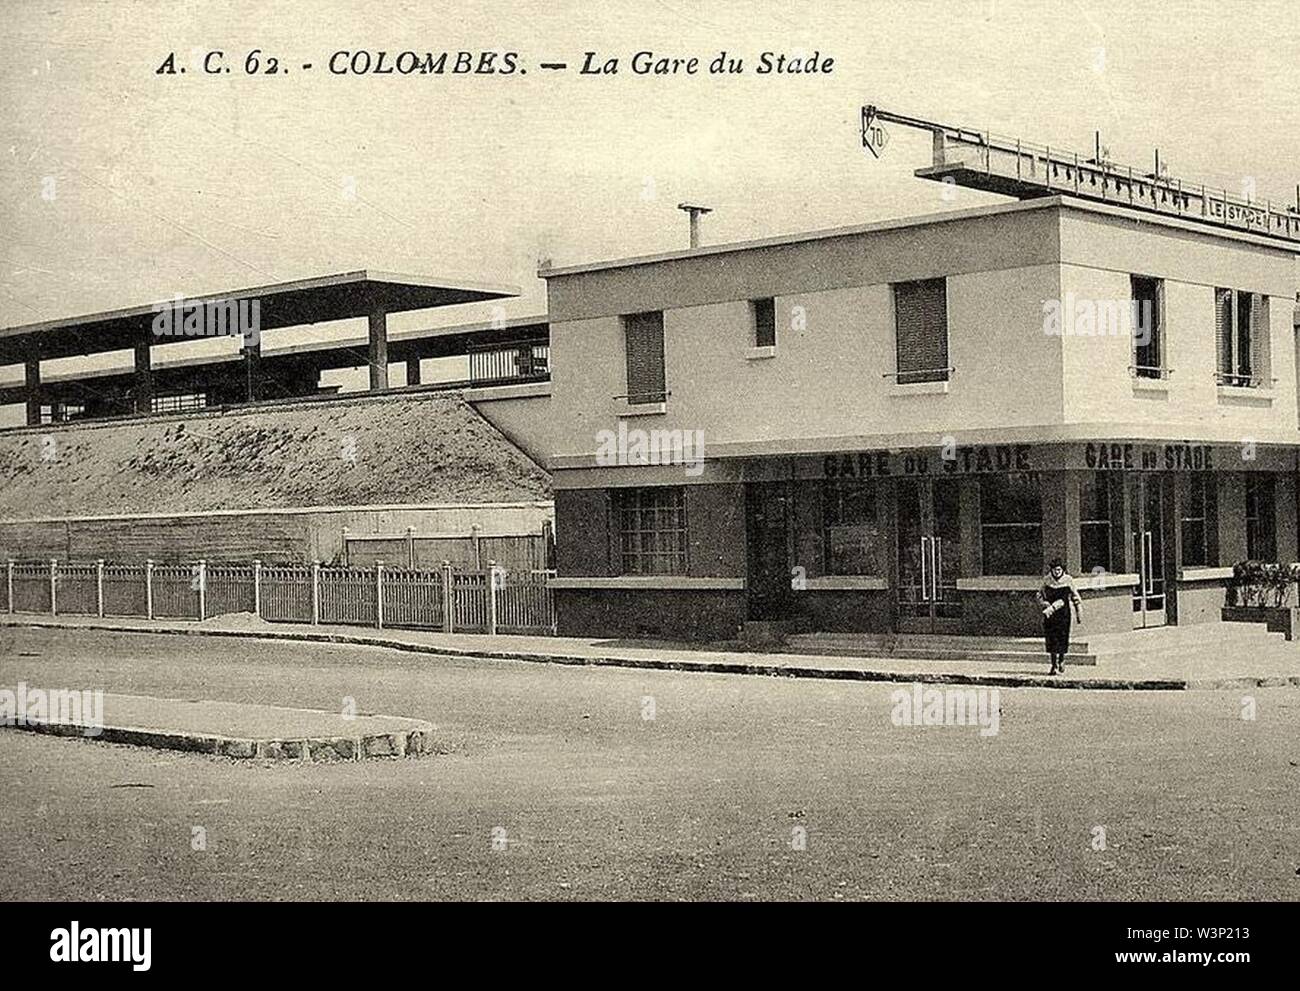 La Gare du Stade de COLOMBES batiment principal. Banque D'Images